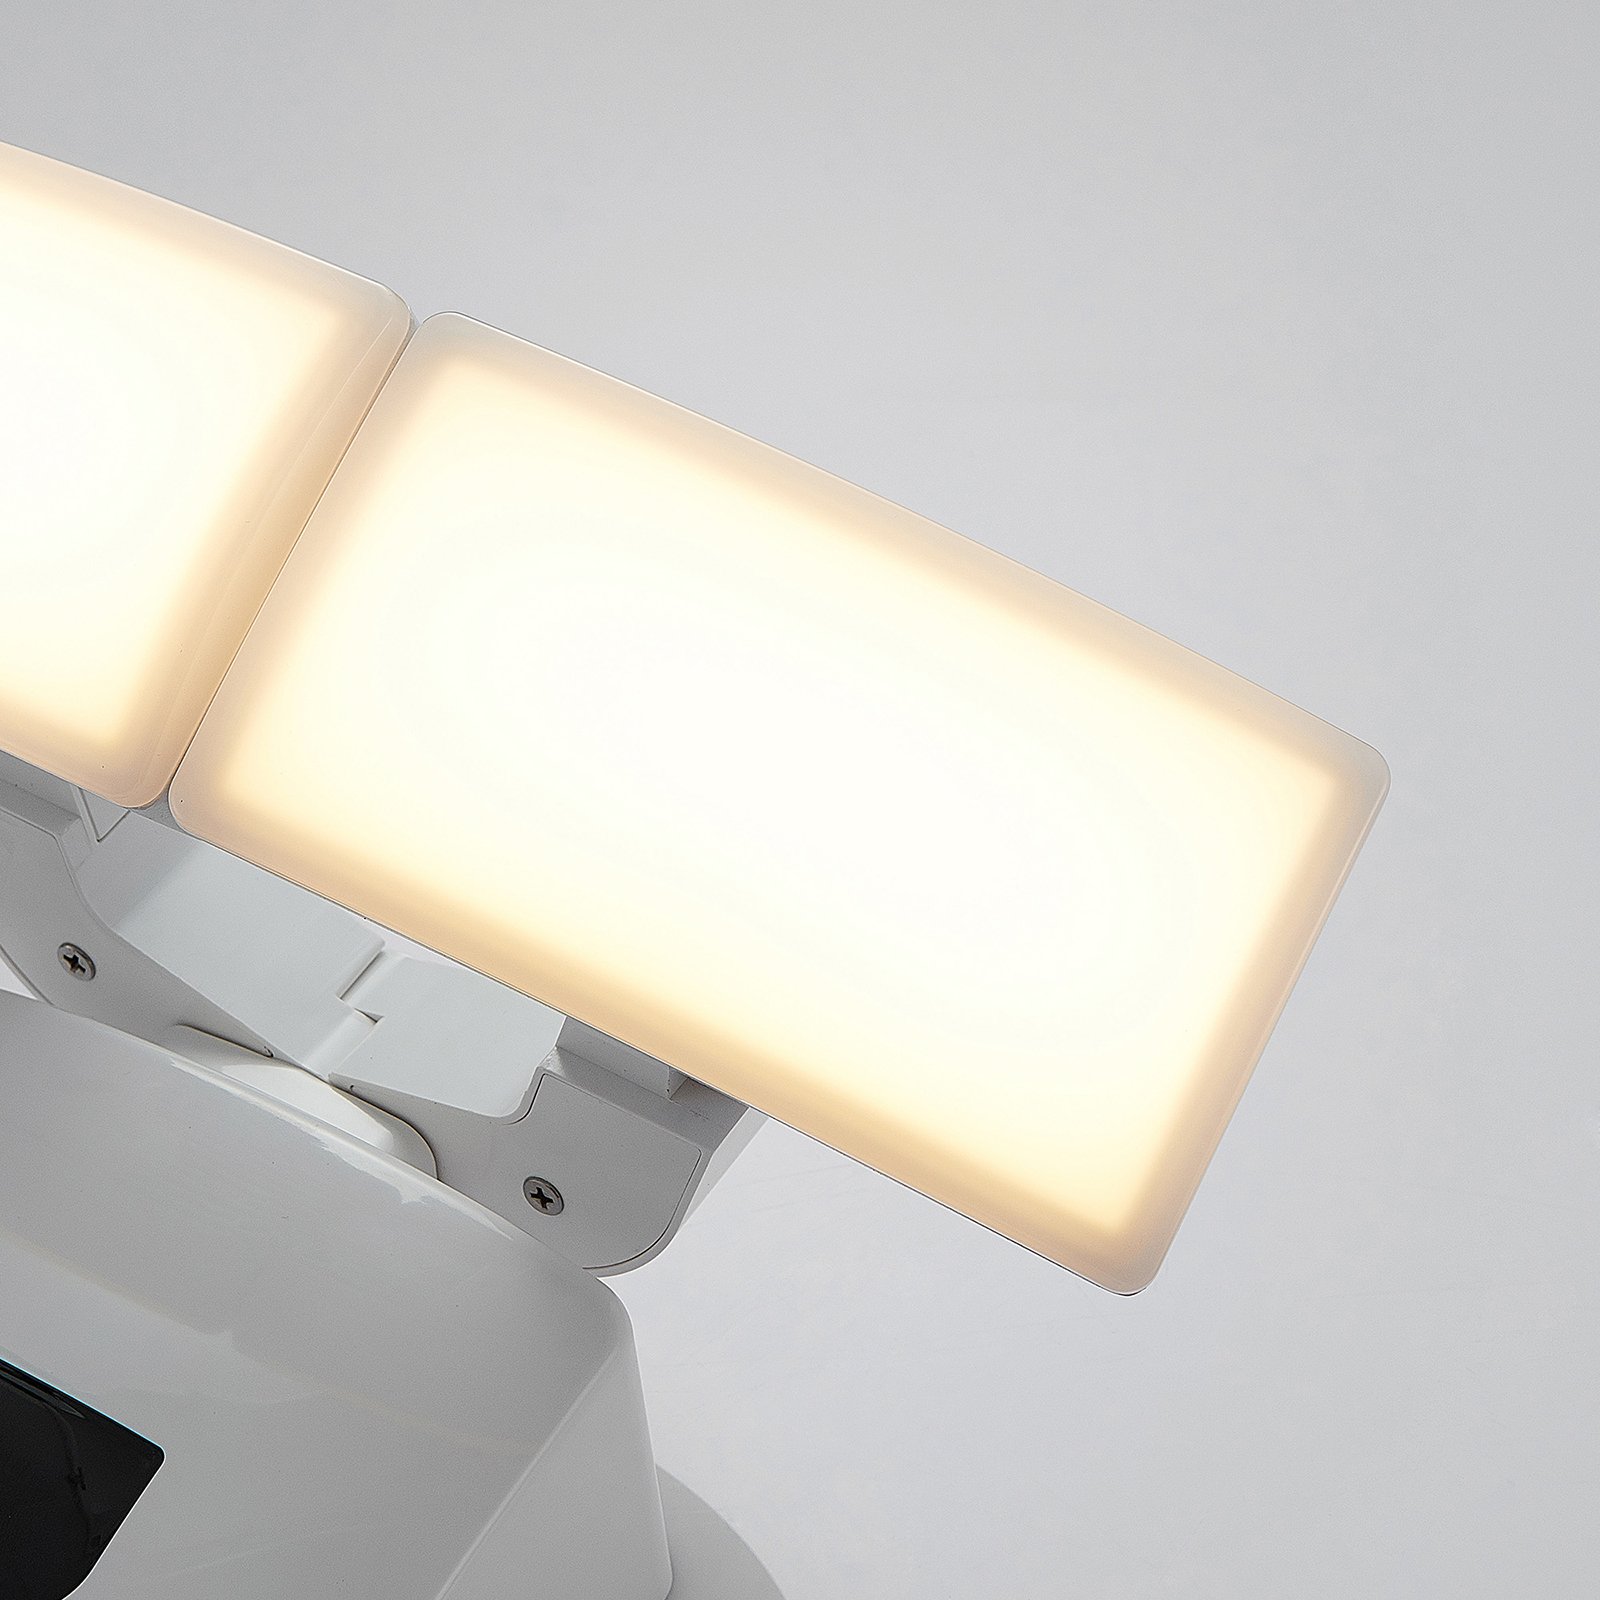 LED buitenwandlamp Nikias met sensor, 2 lampjes